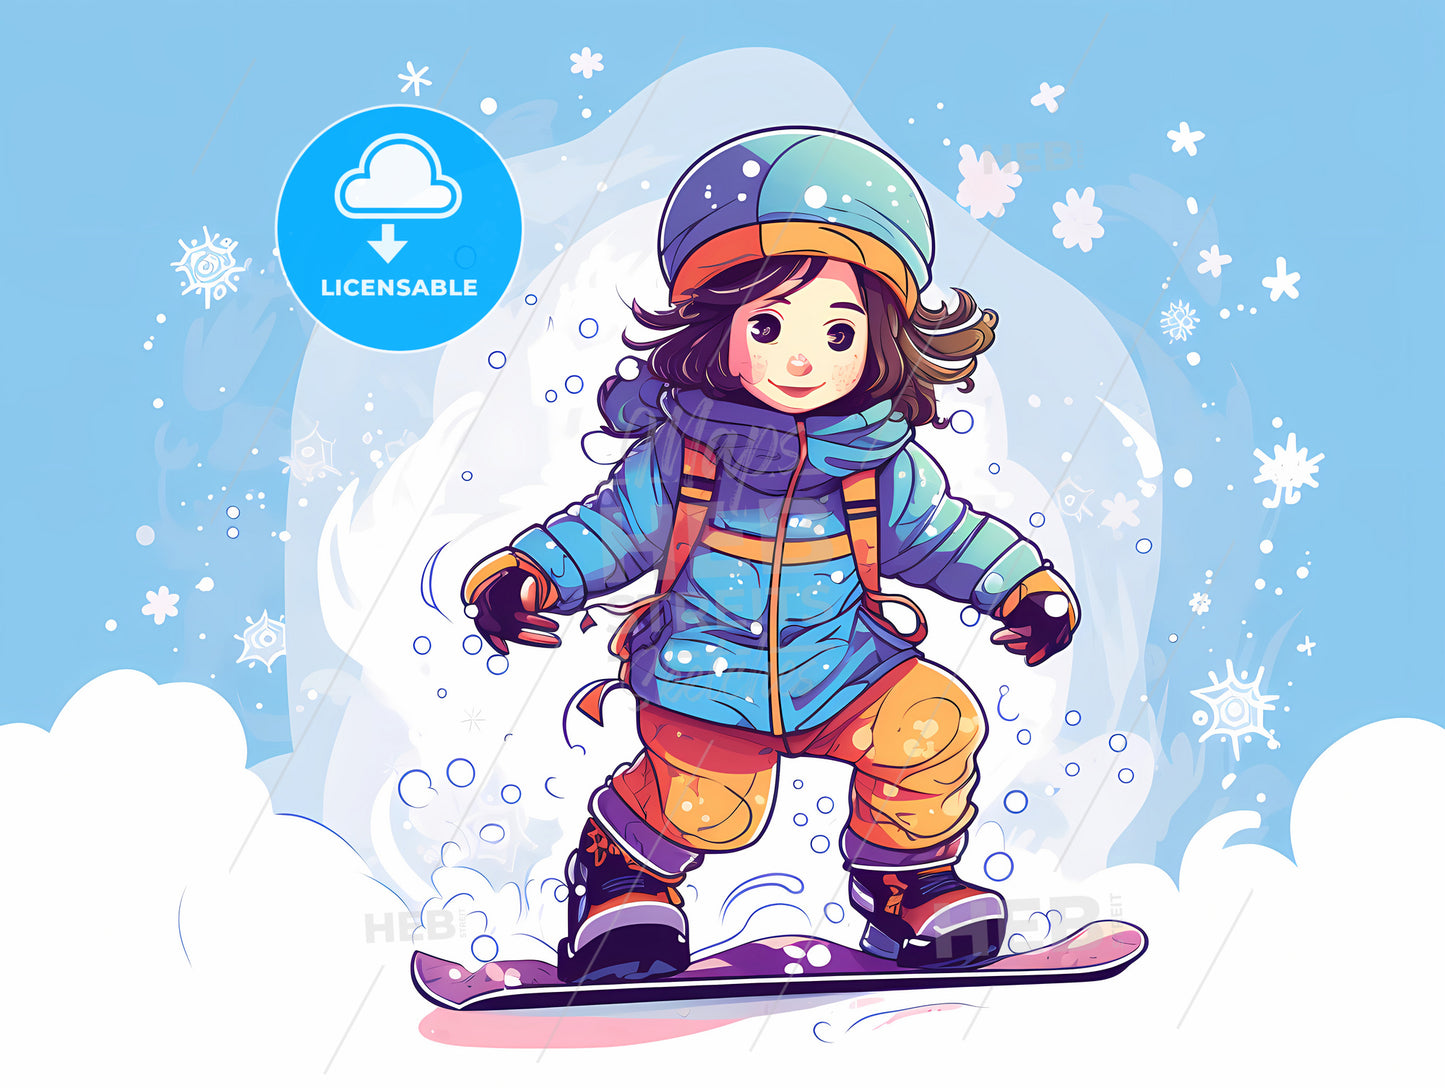 A Cartoon Of A Girl On A Snowboard